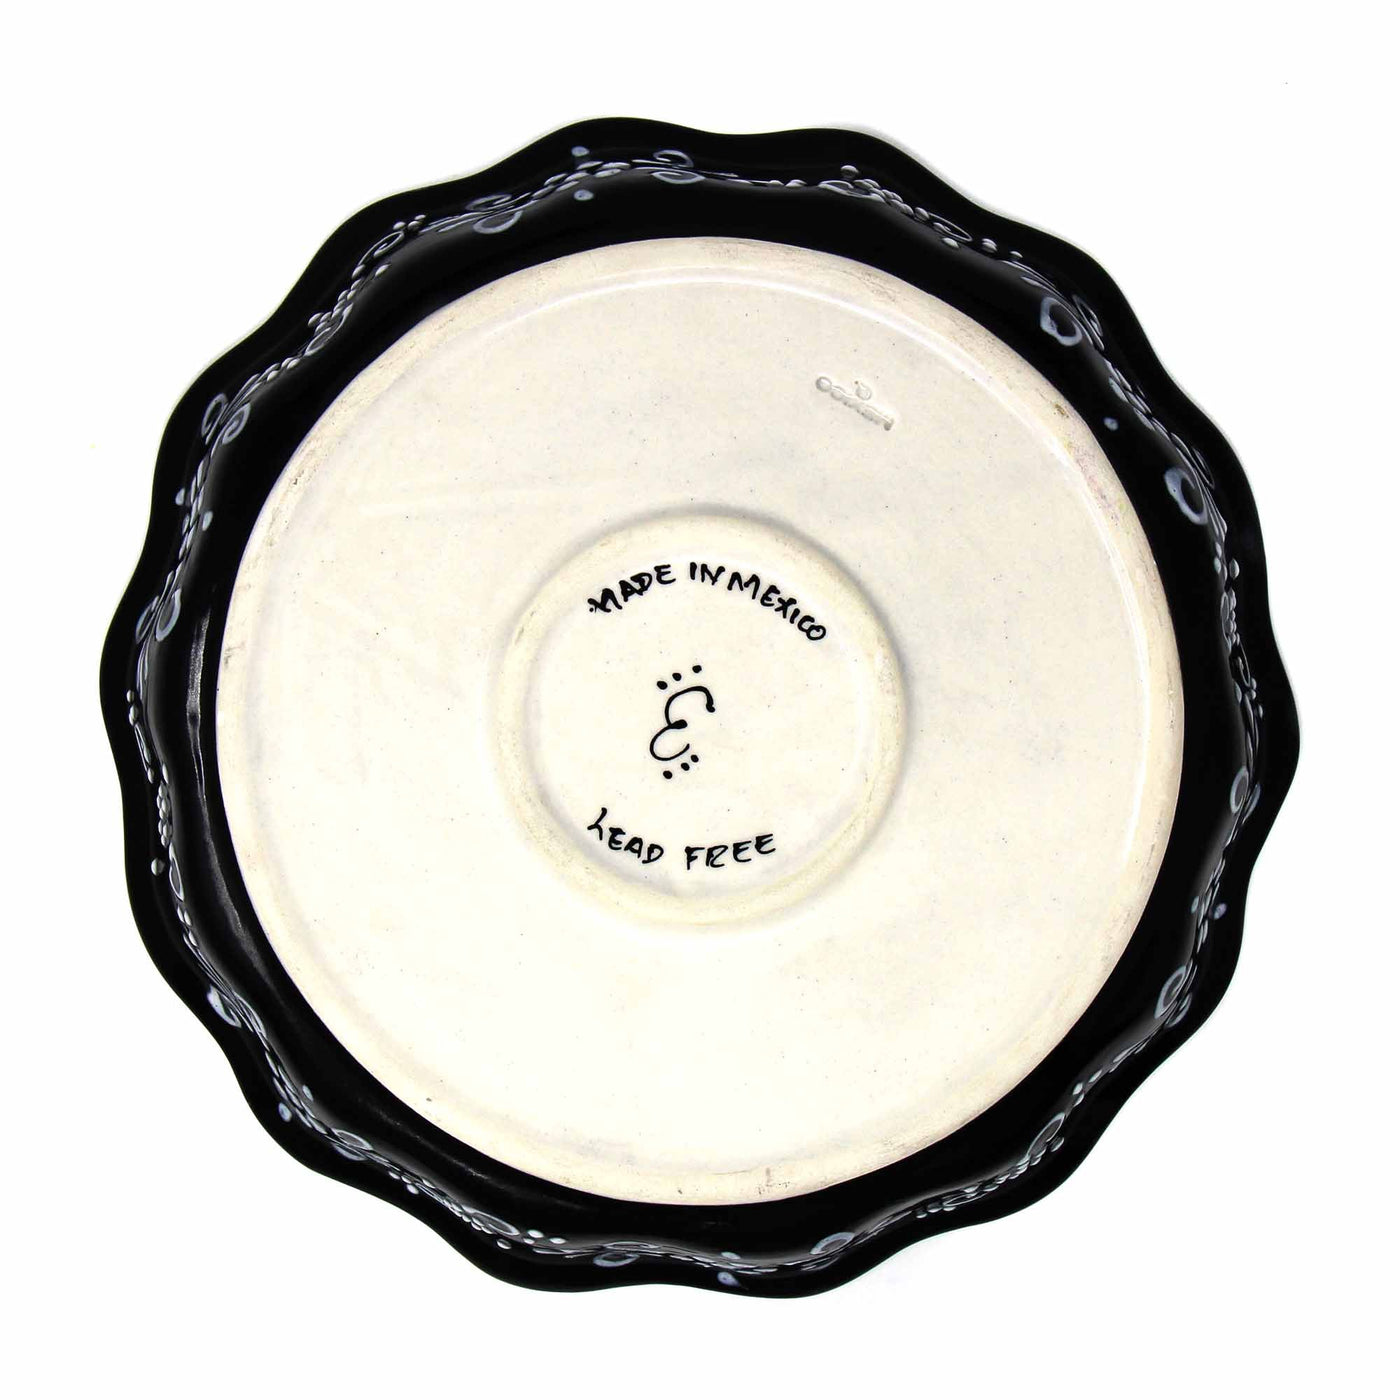 Encantada Handmade Pottery Serving Dish, Black & White - Yvonne’s 100th Wish Inc